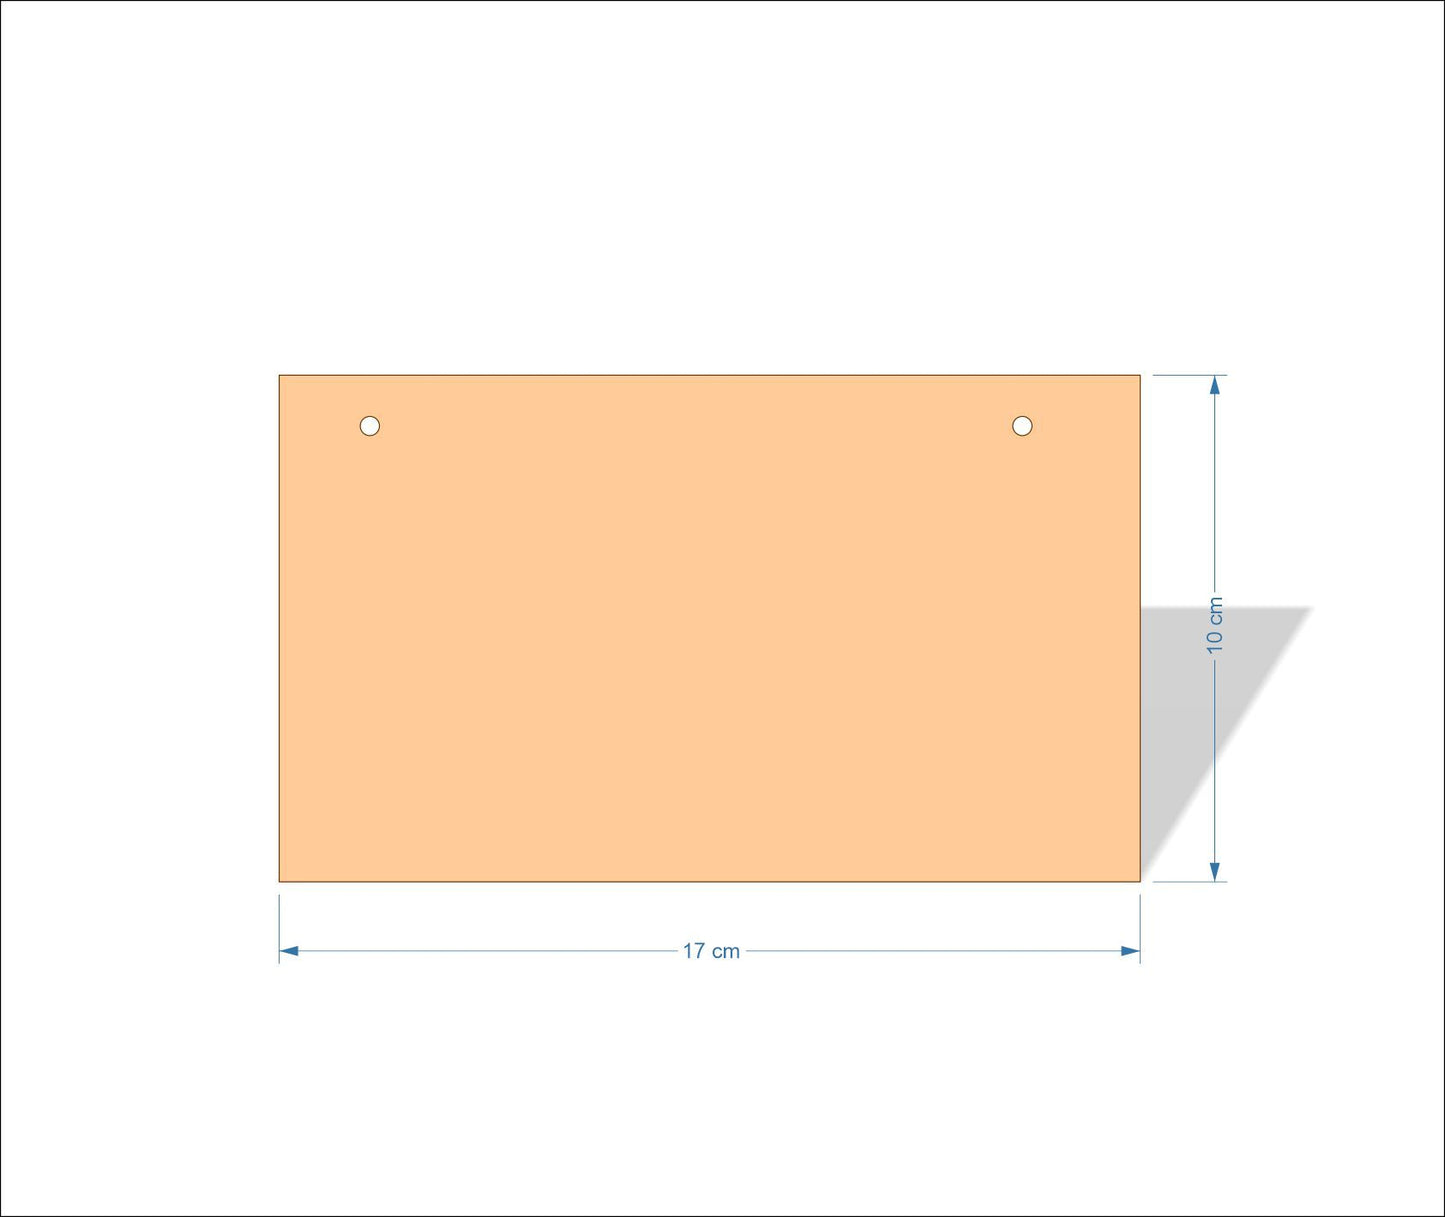 17 cm X 10 cm 3mm MDF Plaques with square corners